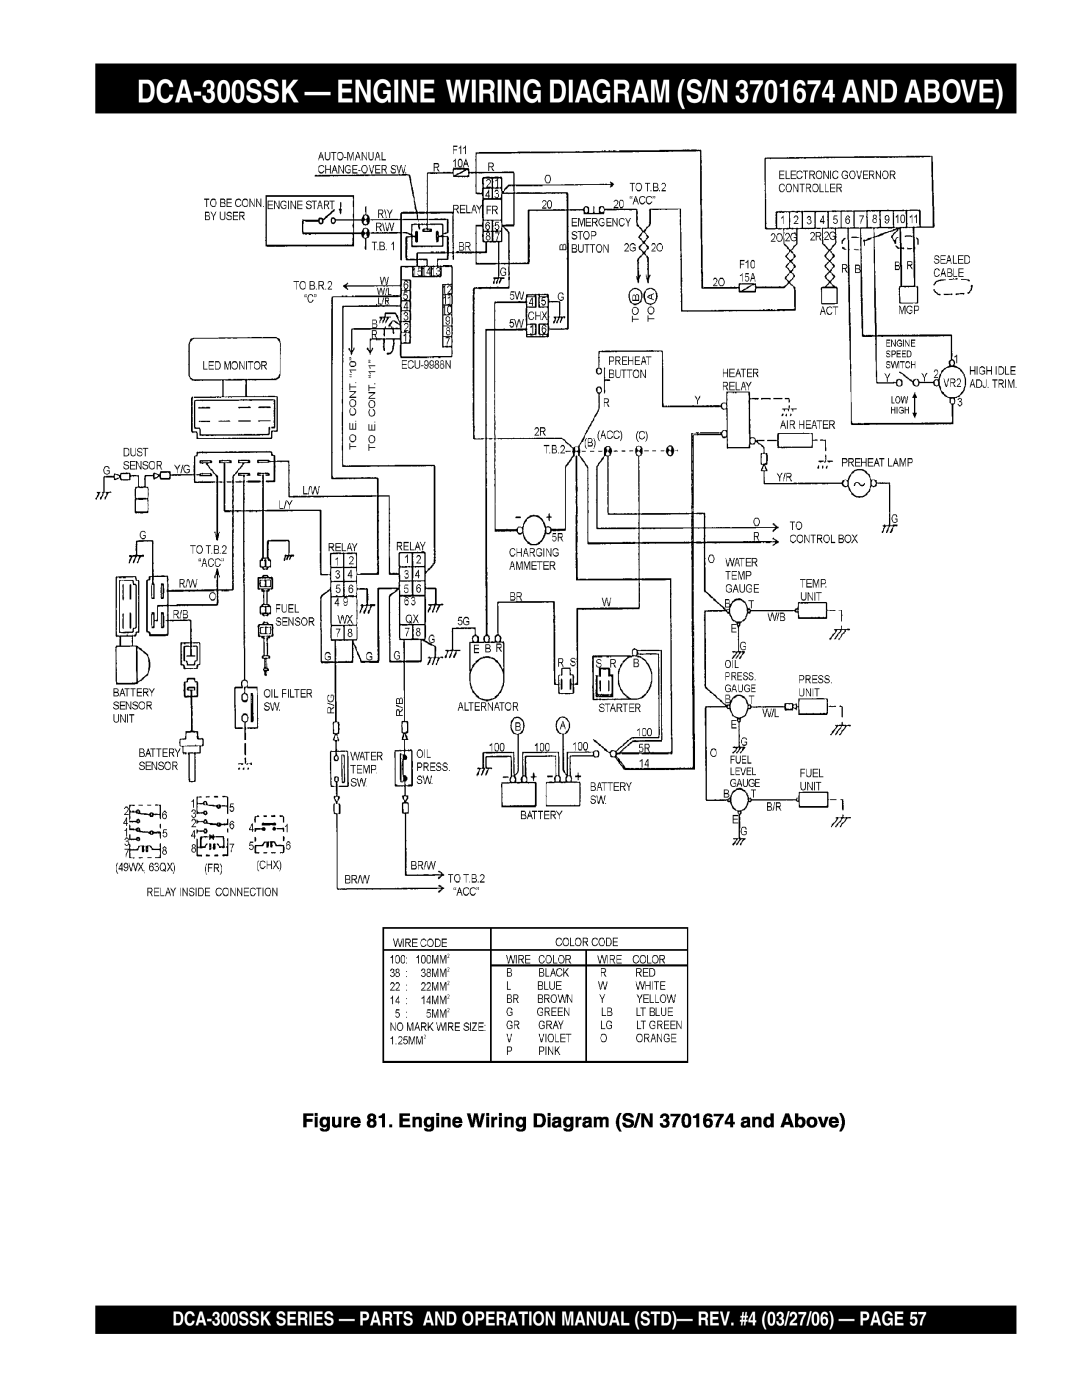 Multiquip manual DCA-300SSK - ENGINE WIRING DIAGRAM S/N 3701674 AND ABOVE, Engine Wiring Diagram S/N 3701674 and Above 